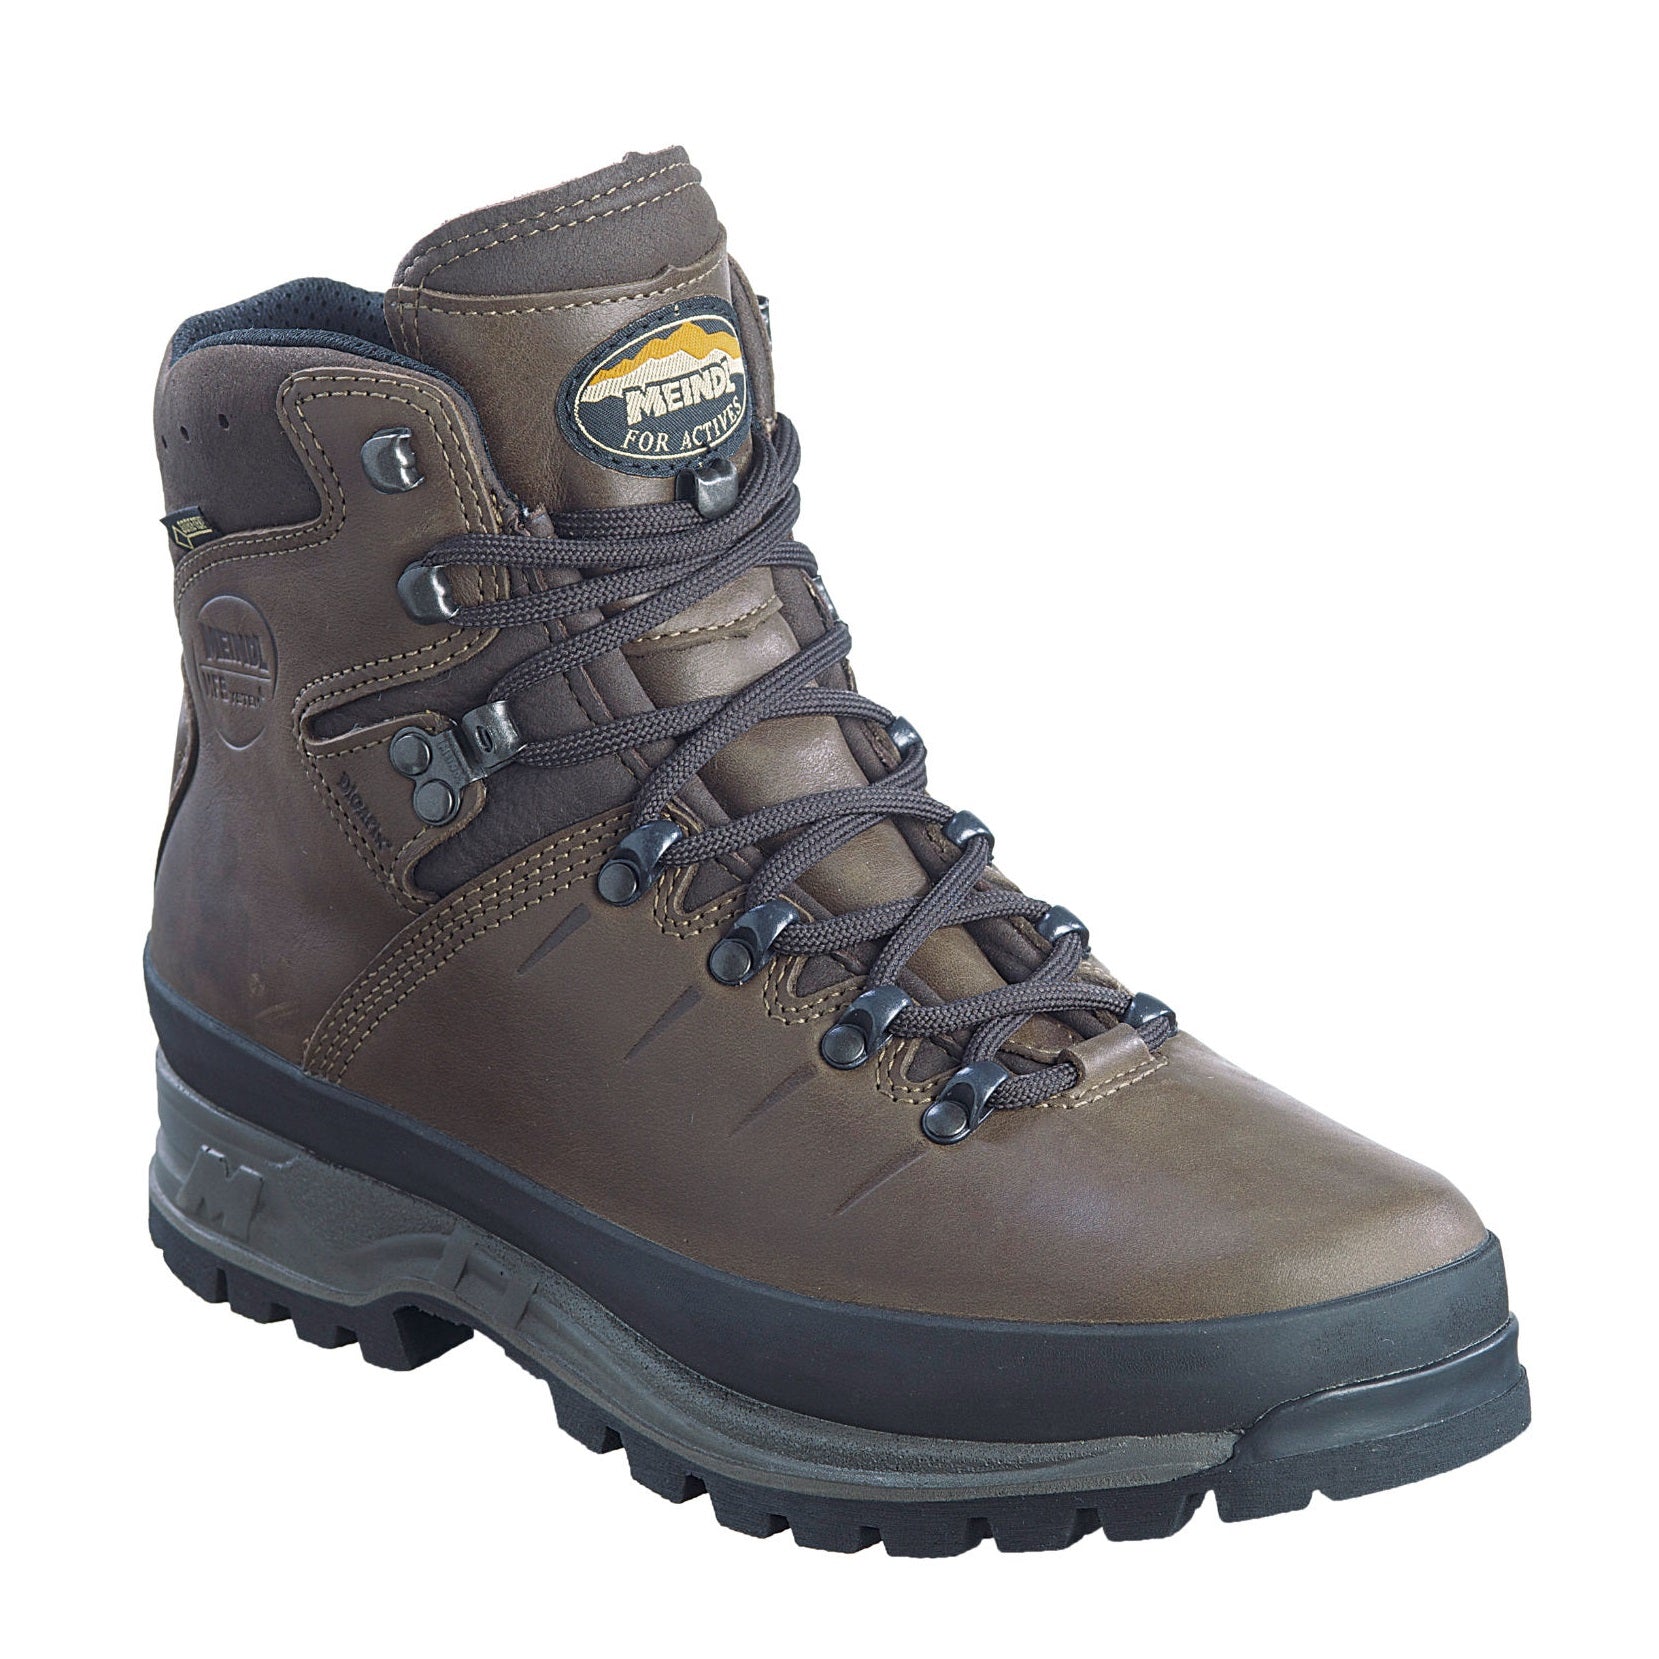 30% off - MEINDL Bhutan MFS Gore-Tex Walking Boots - Mens - Dark Brown - Size: UK 7, 10, 10.5 & 13